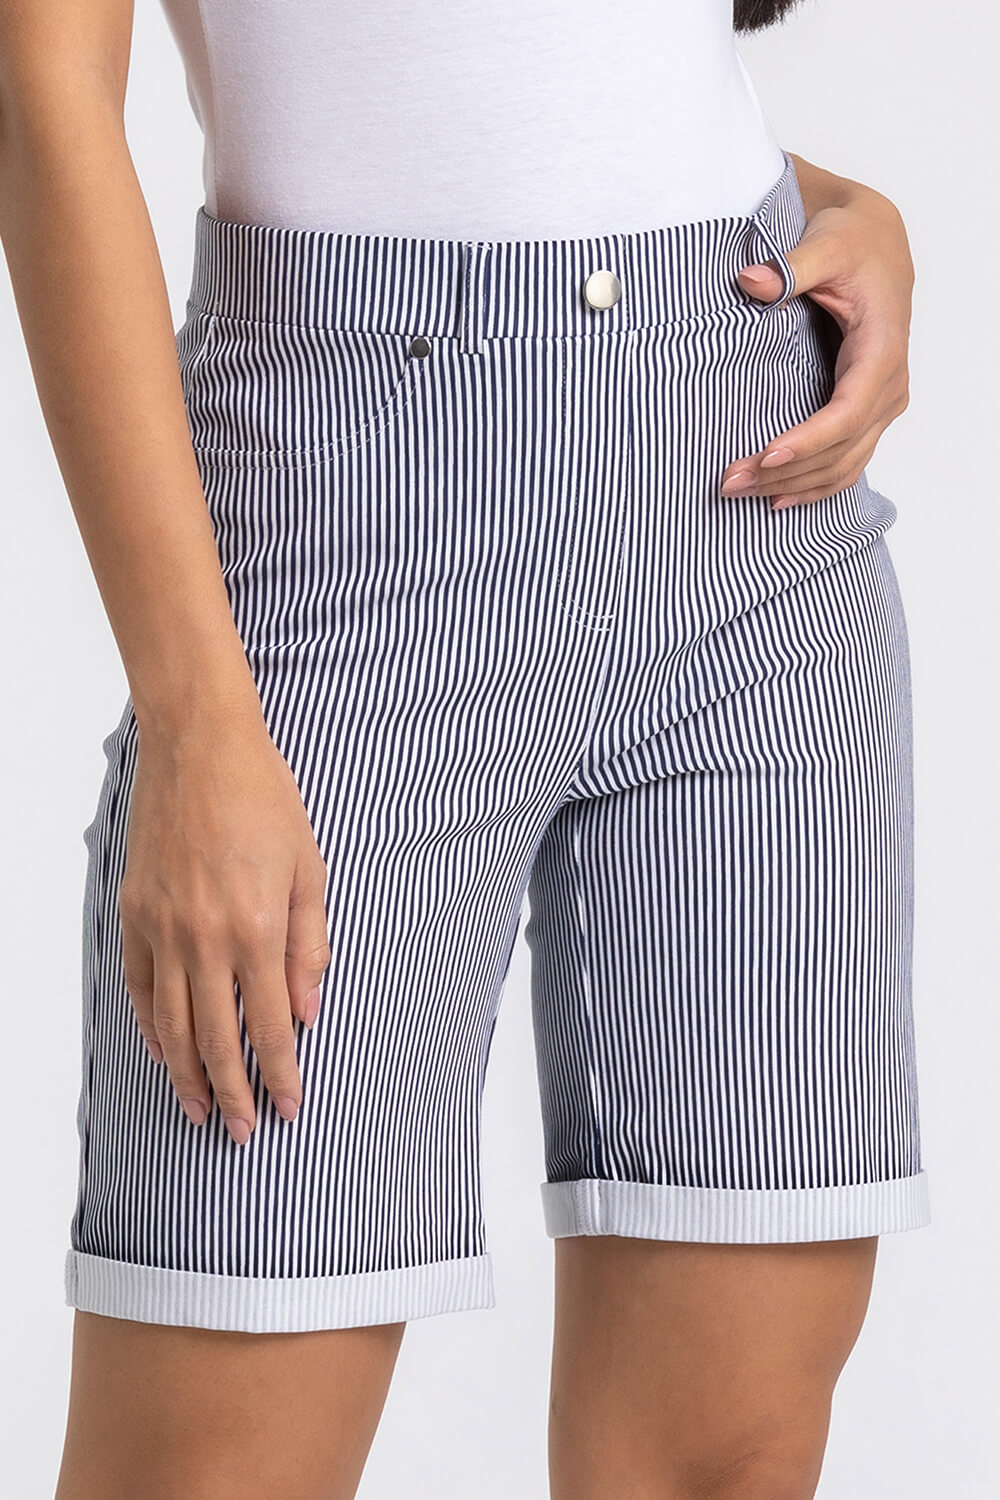 Stripe Print Turn Up Stretch Shorts